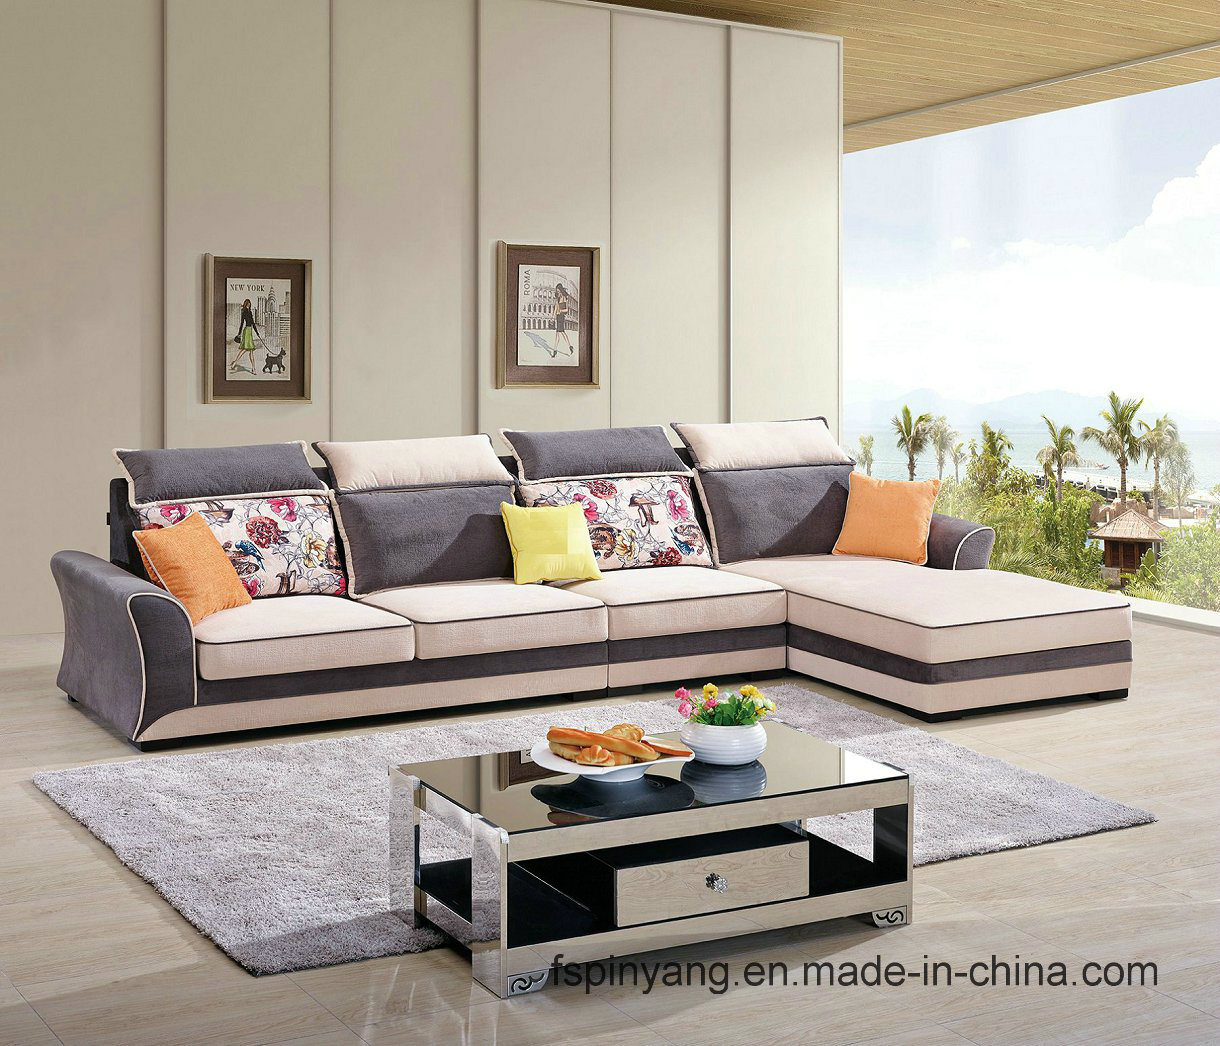 Mordern Design Cotton Linen Fabric Sofa, Chaise Lounge Sofa 2015-1